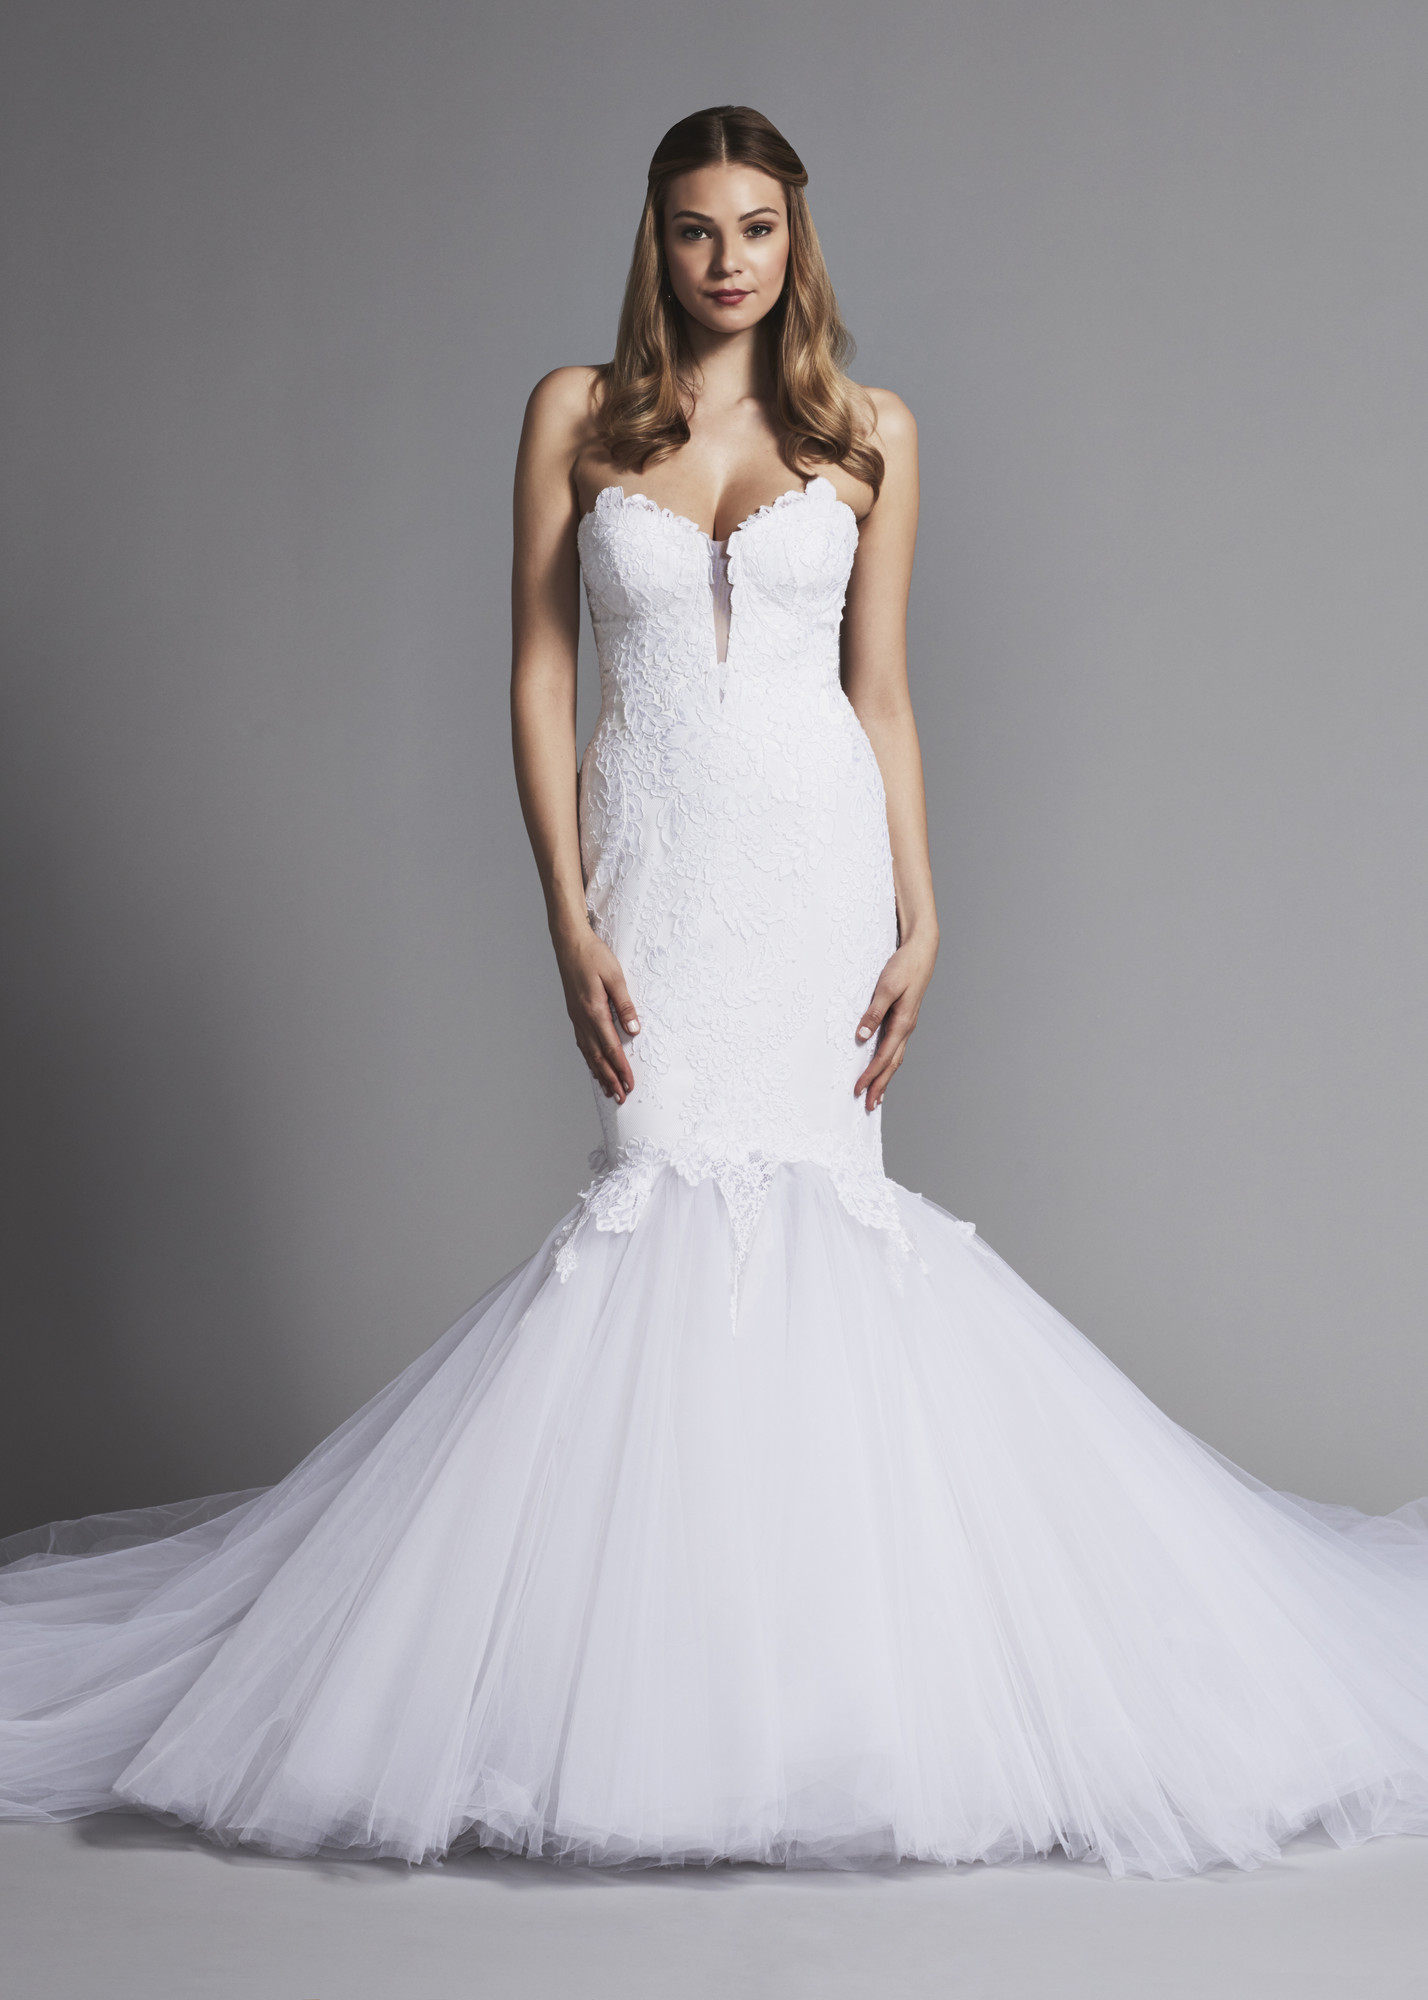 4644 Mermaid Wedding Dress by Pnina Tornai for Kleinfeld - WeddingWire.com